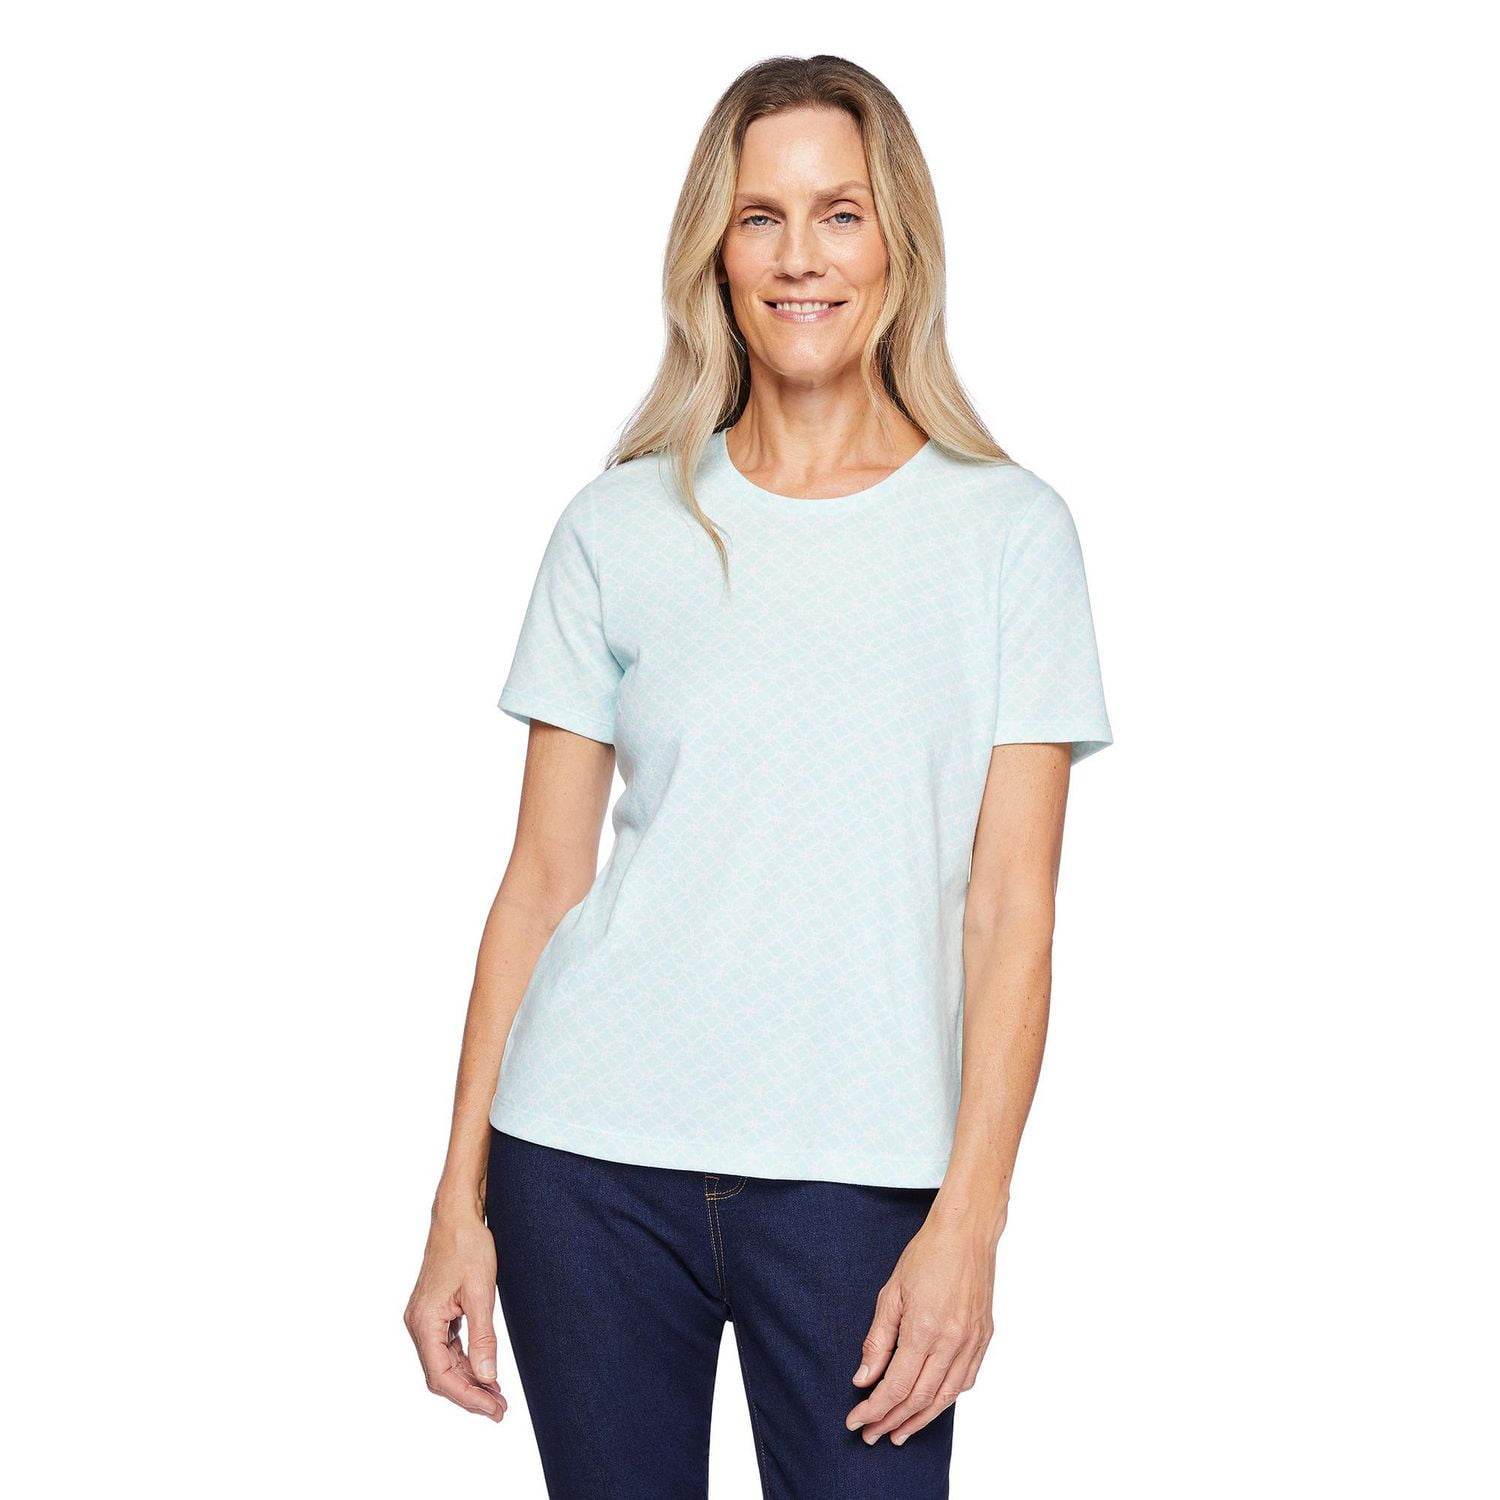 SSDN Women's Flower Printed Soft Sleep shirt Cotton Short Sleeve